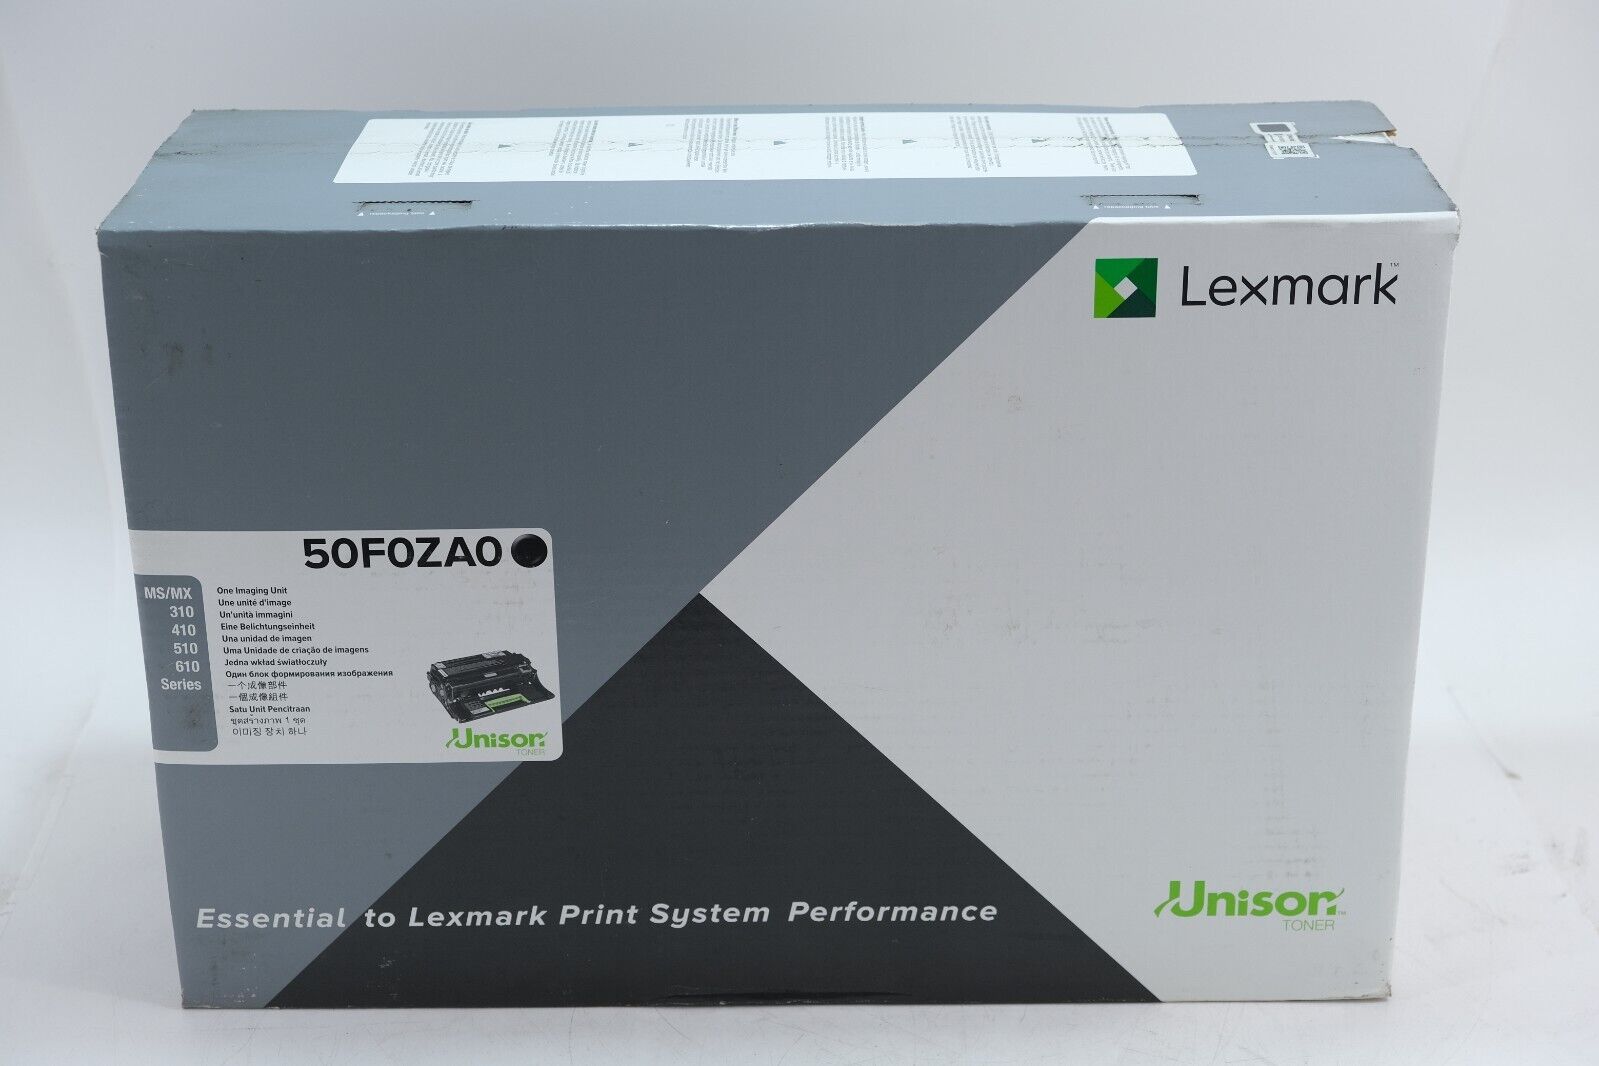 Genuine Lexmark 50F0ZA0 Imaging Unit Unison Toner Cartridge - Black